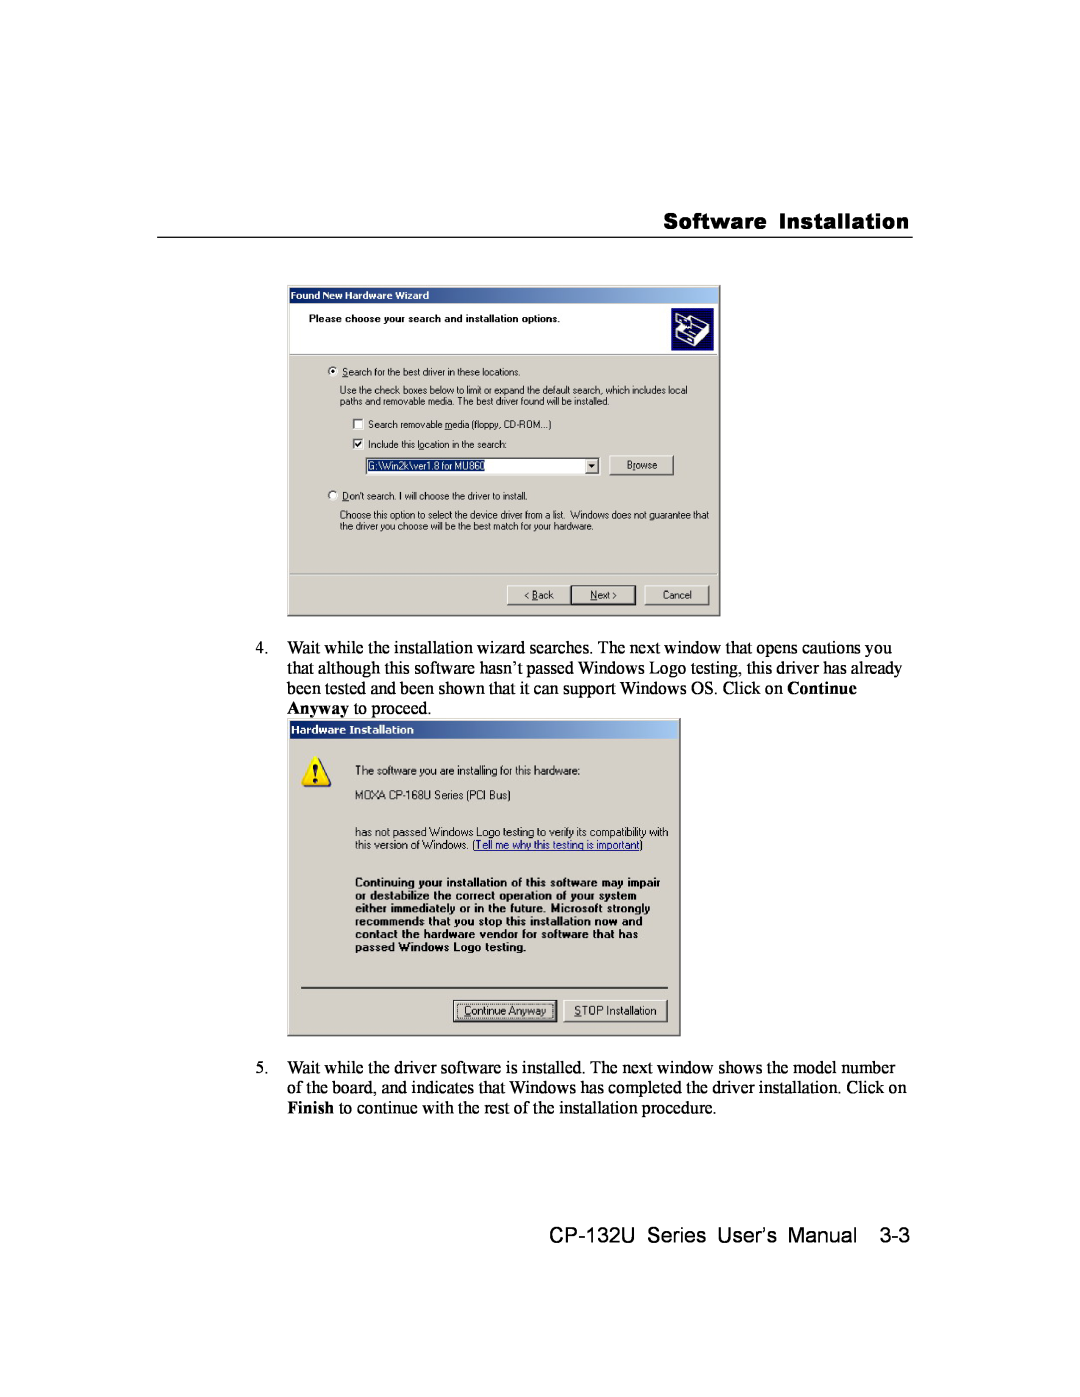 Moxa Technologies user manual Software Installation, CP-132U Series User’s Manual 